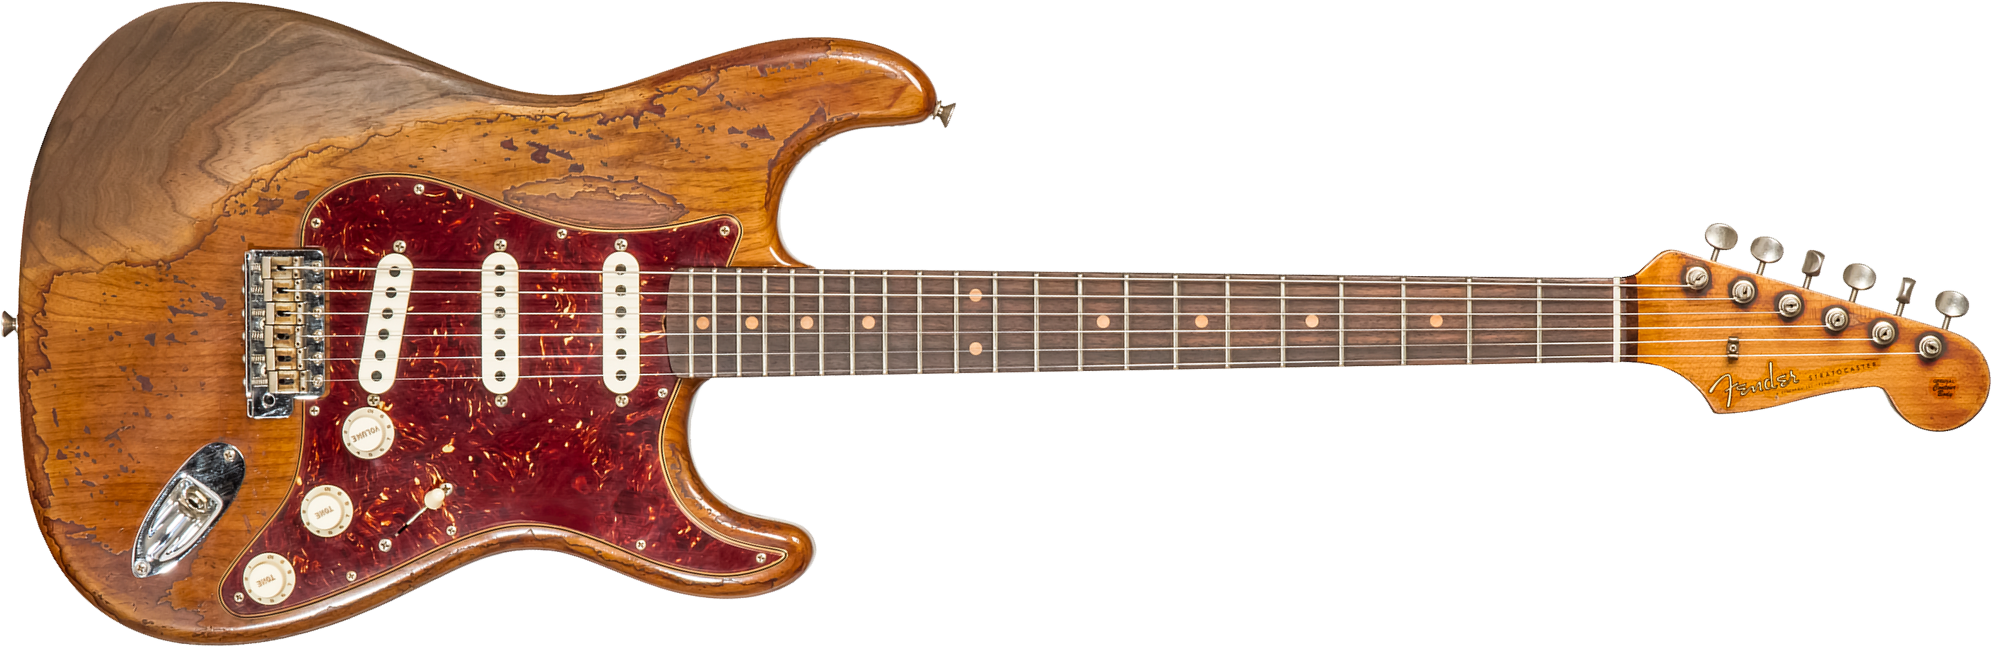 Fender Custom Shop Strat 1961 3s Trem Rw #cz570051 - Super Heavy Relic Natural - E-Gitarre in Str-Form - Main picture